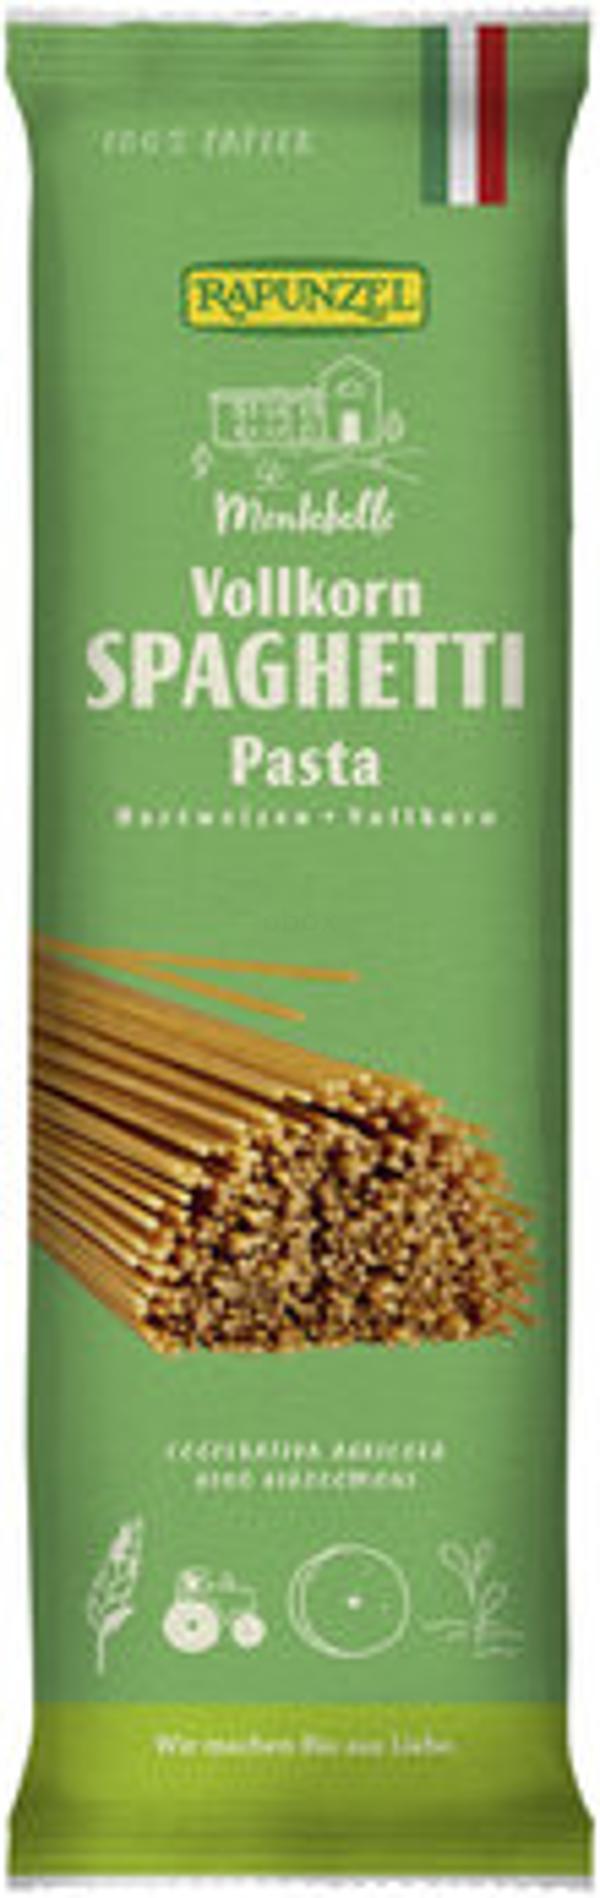 Produktfoto zu Spaghetti Vollkorn, 500 g